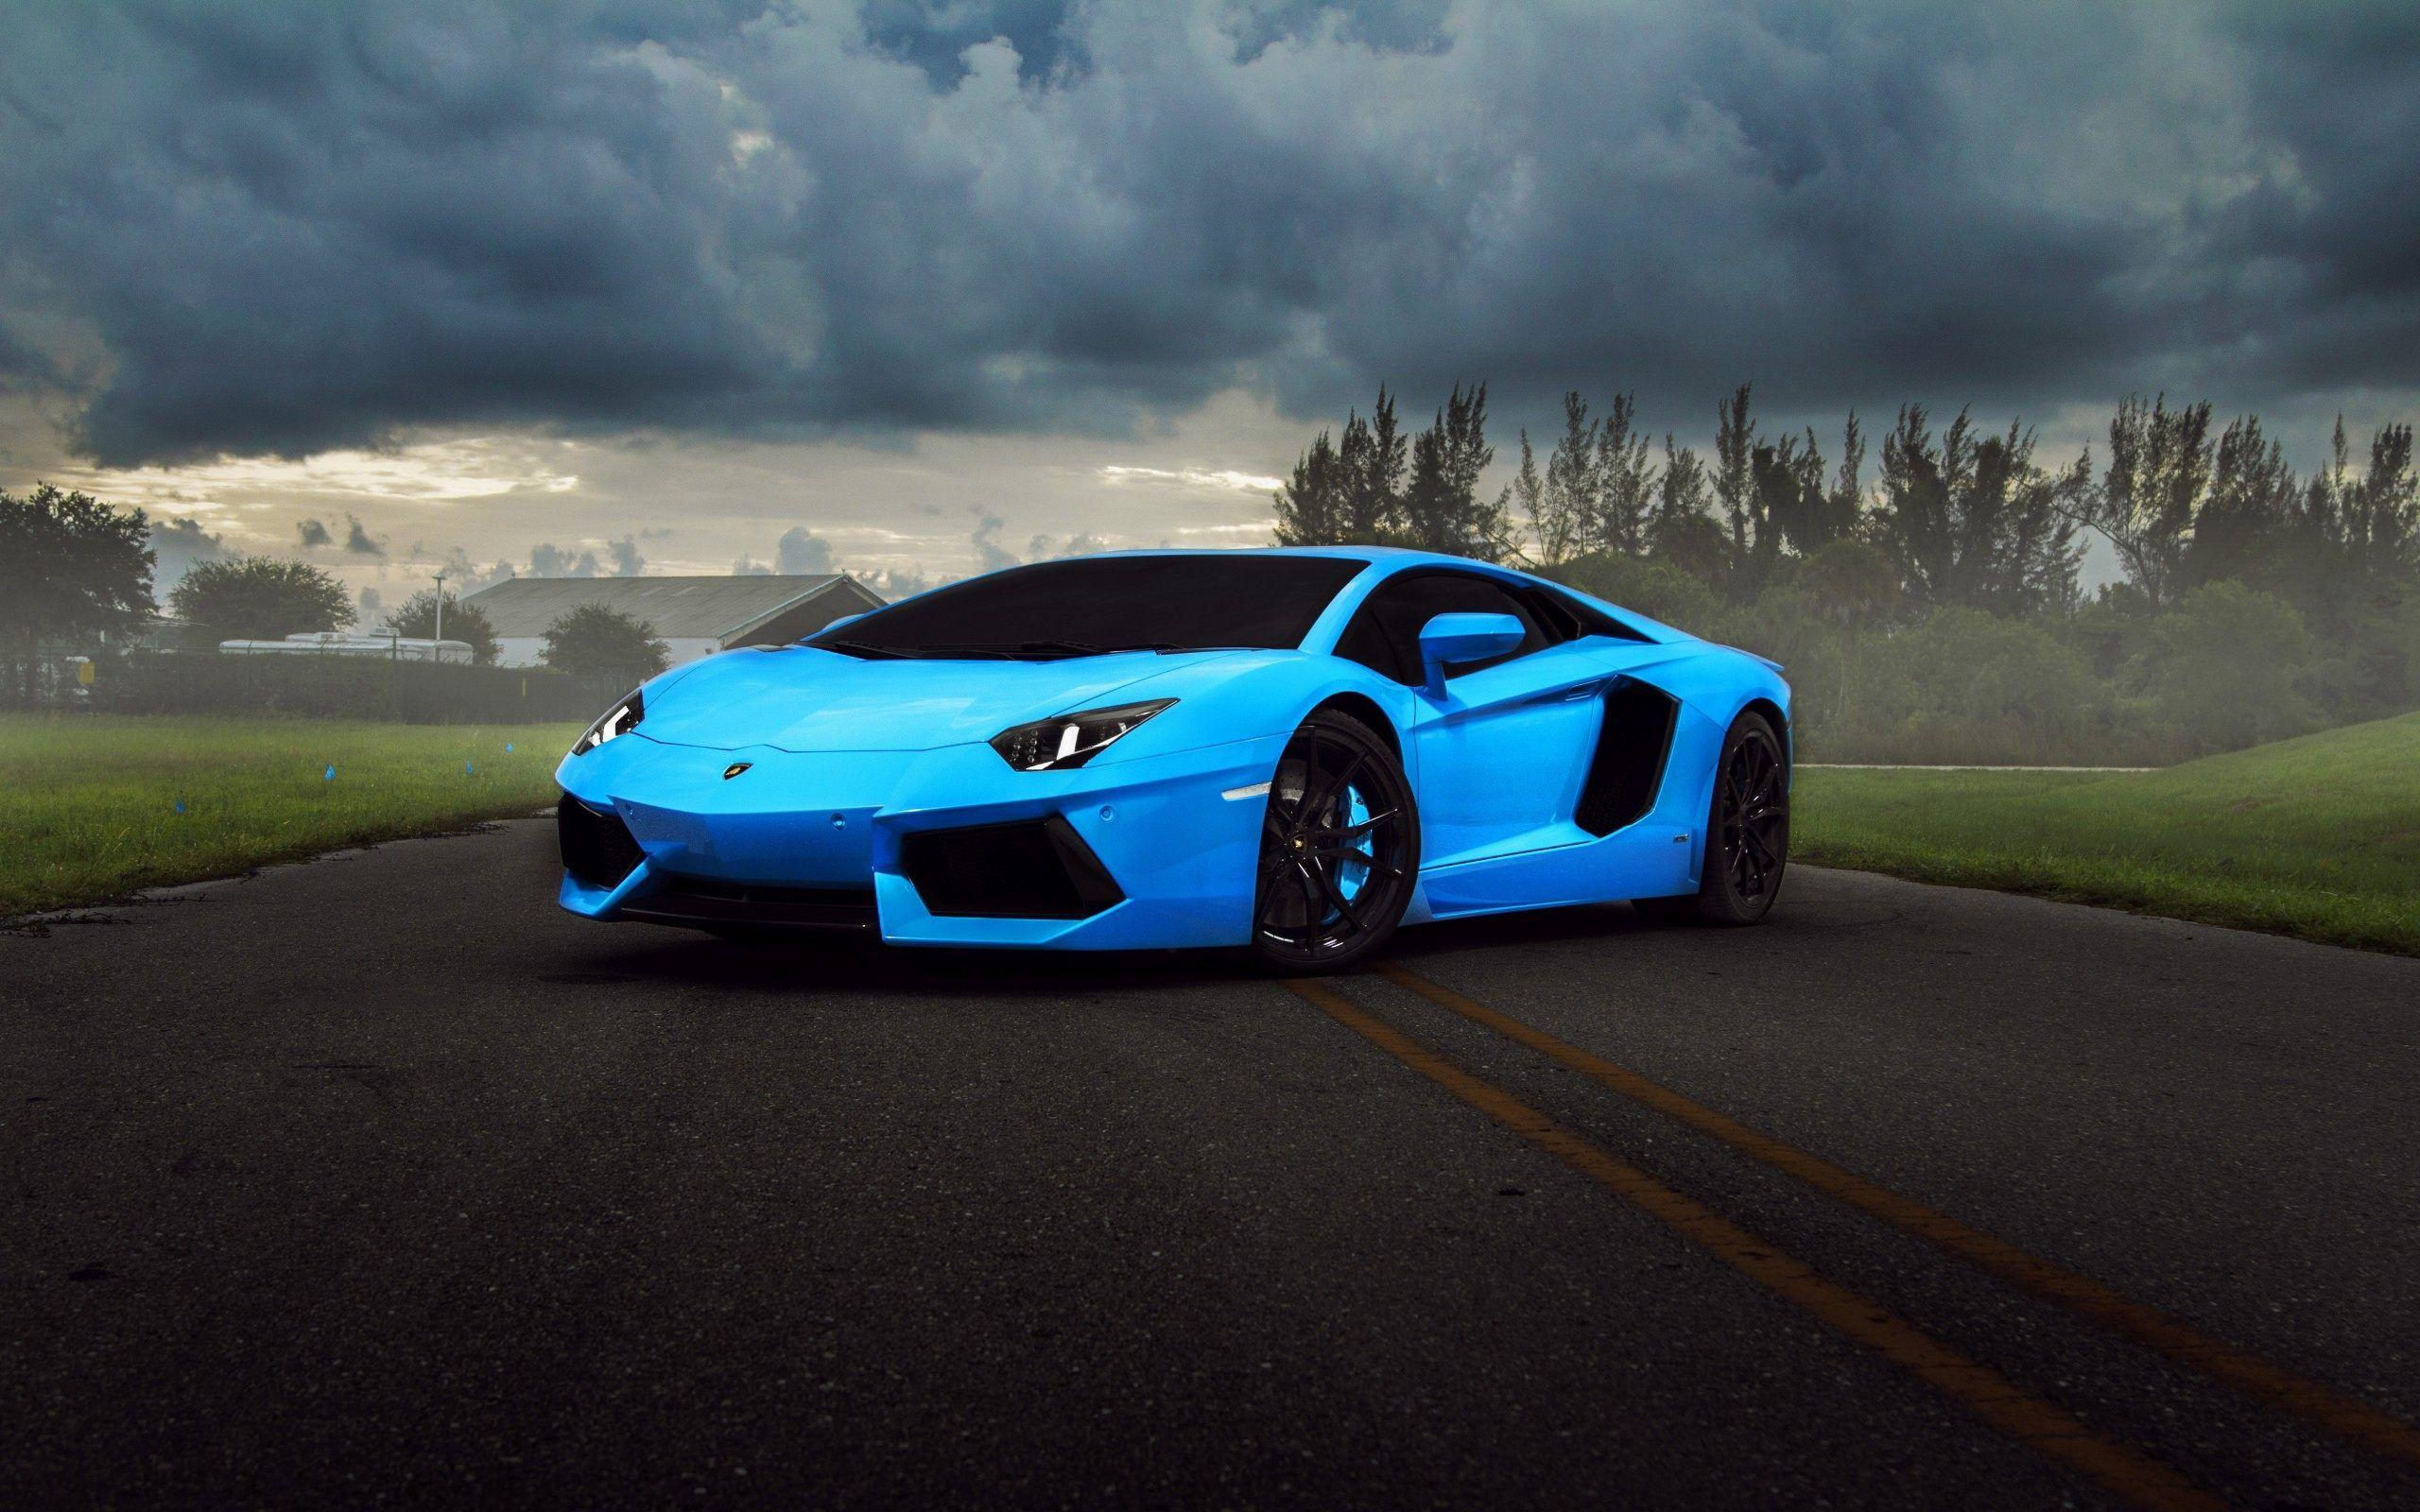 Blue Lamborghini Wallpaper Free. Vehicles Wallpaper